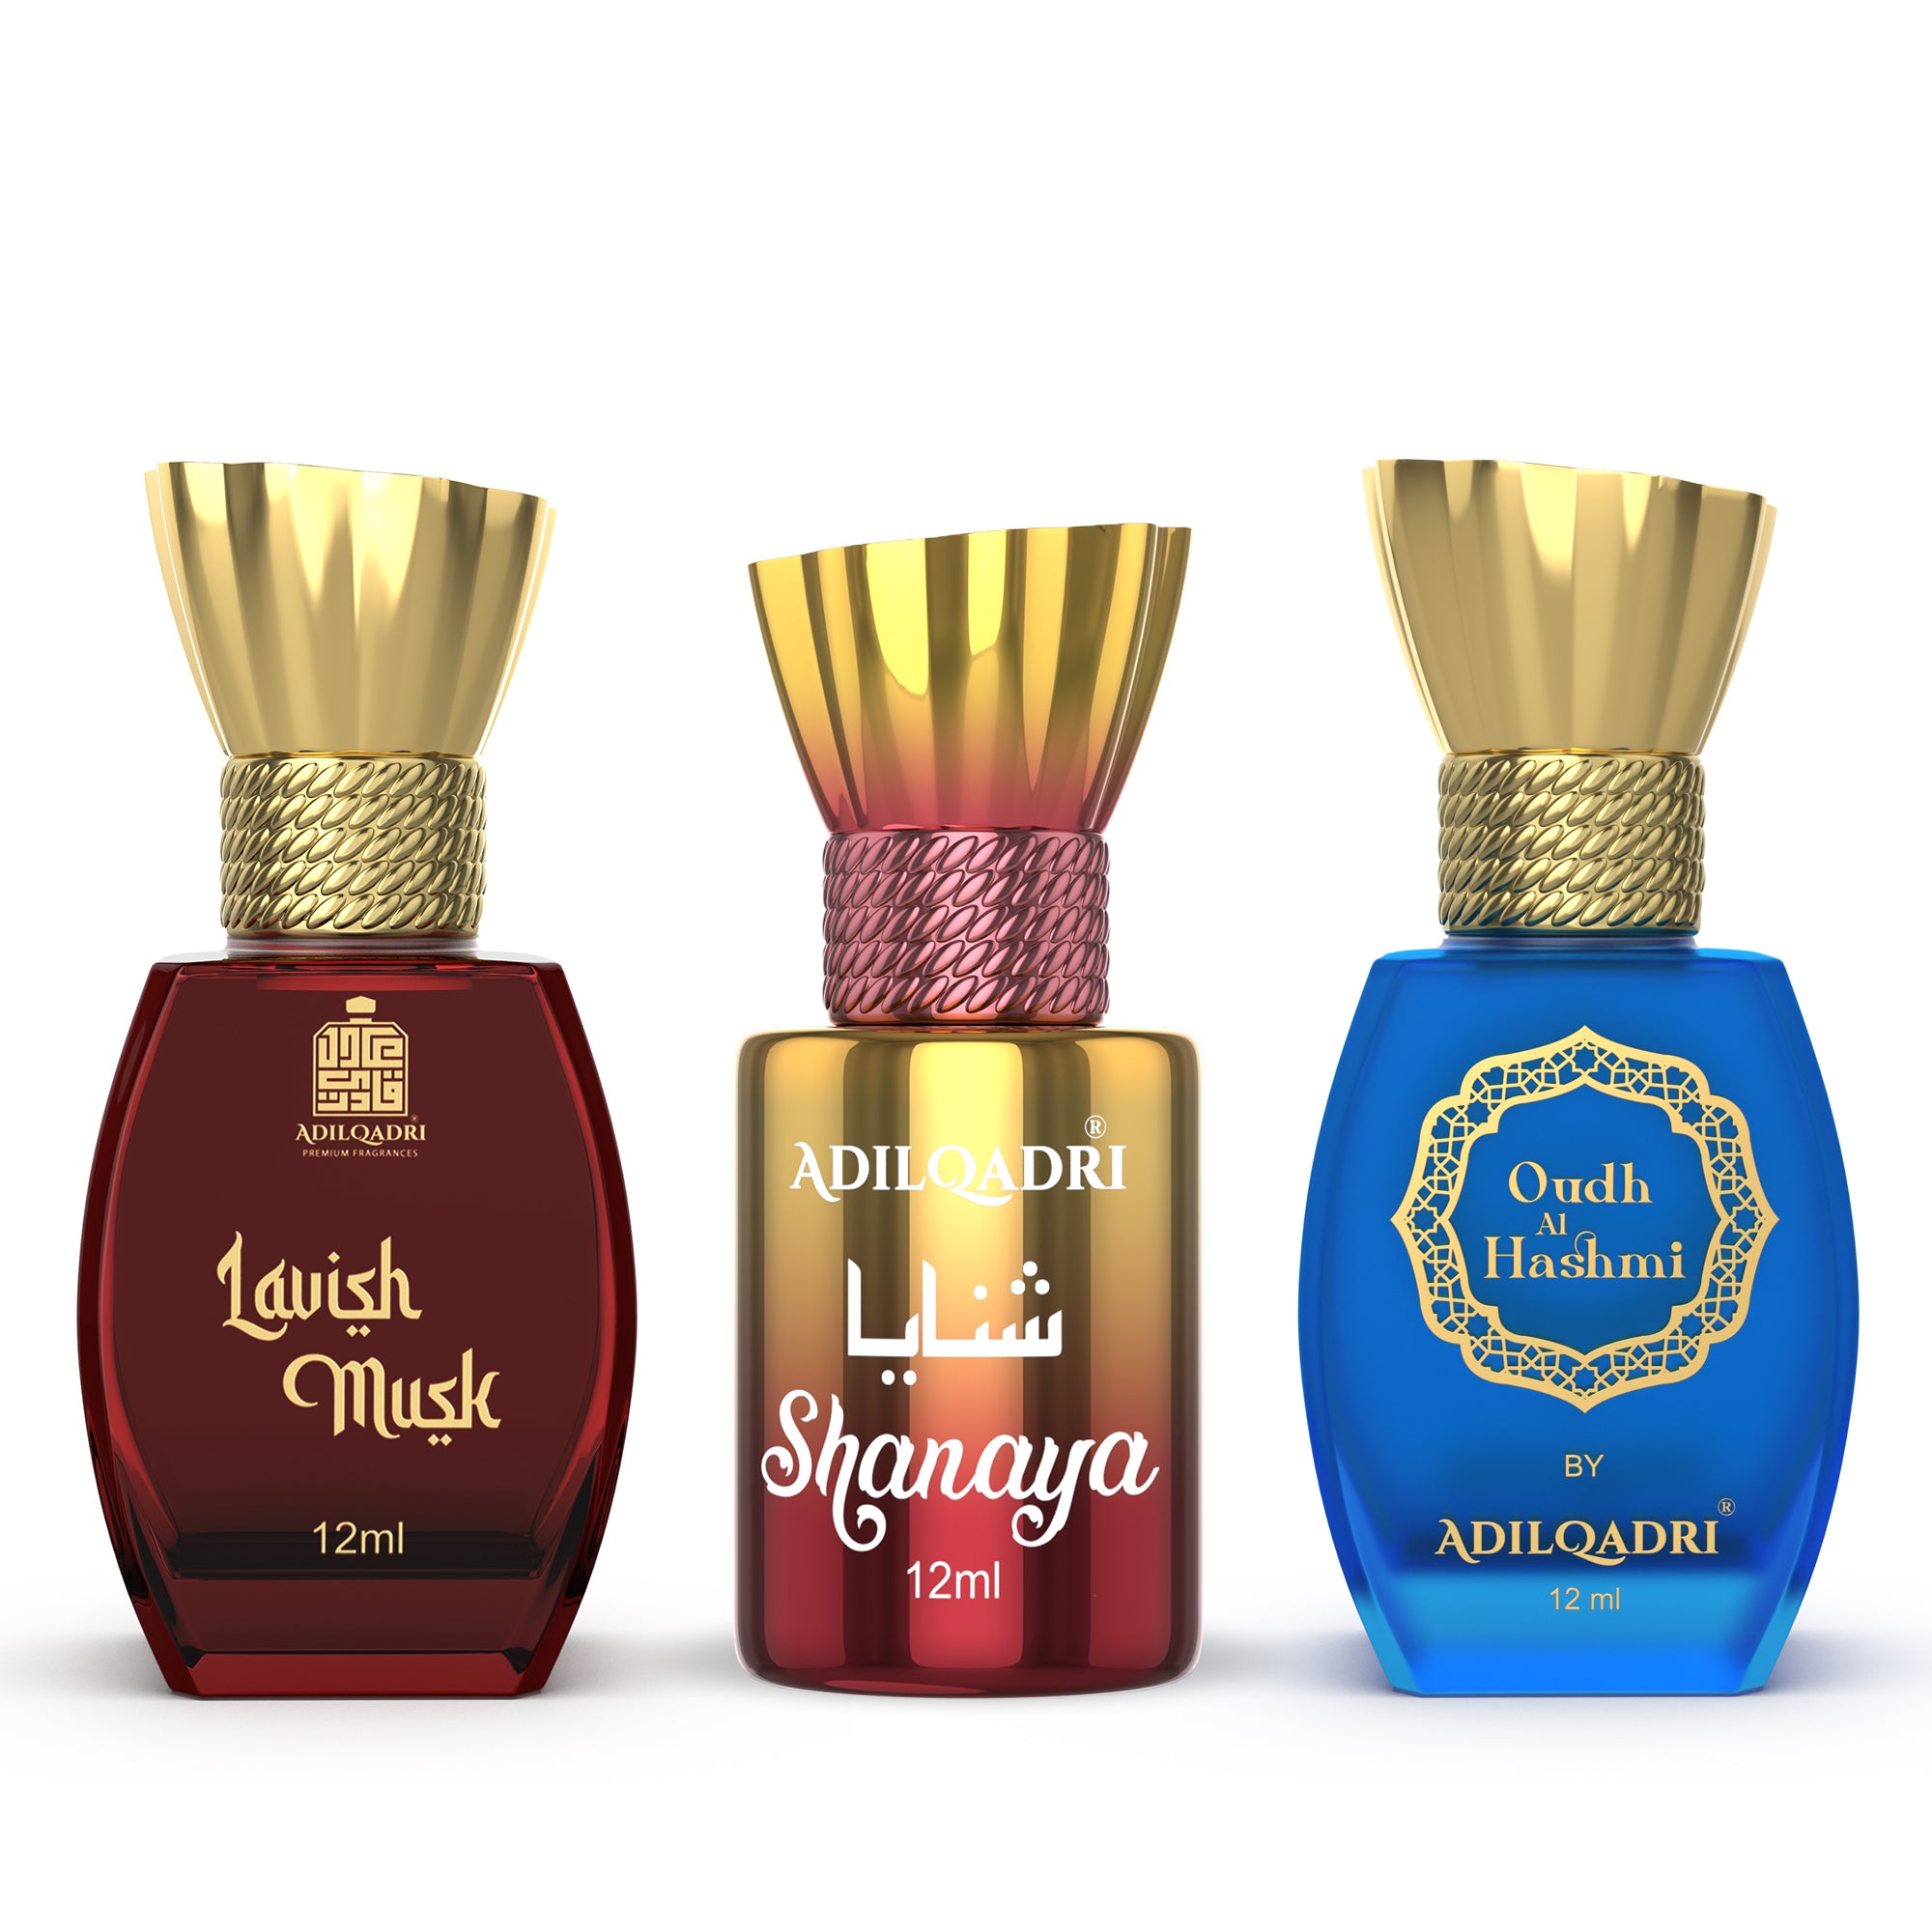 Lavish Musk Premium Attar Perfume